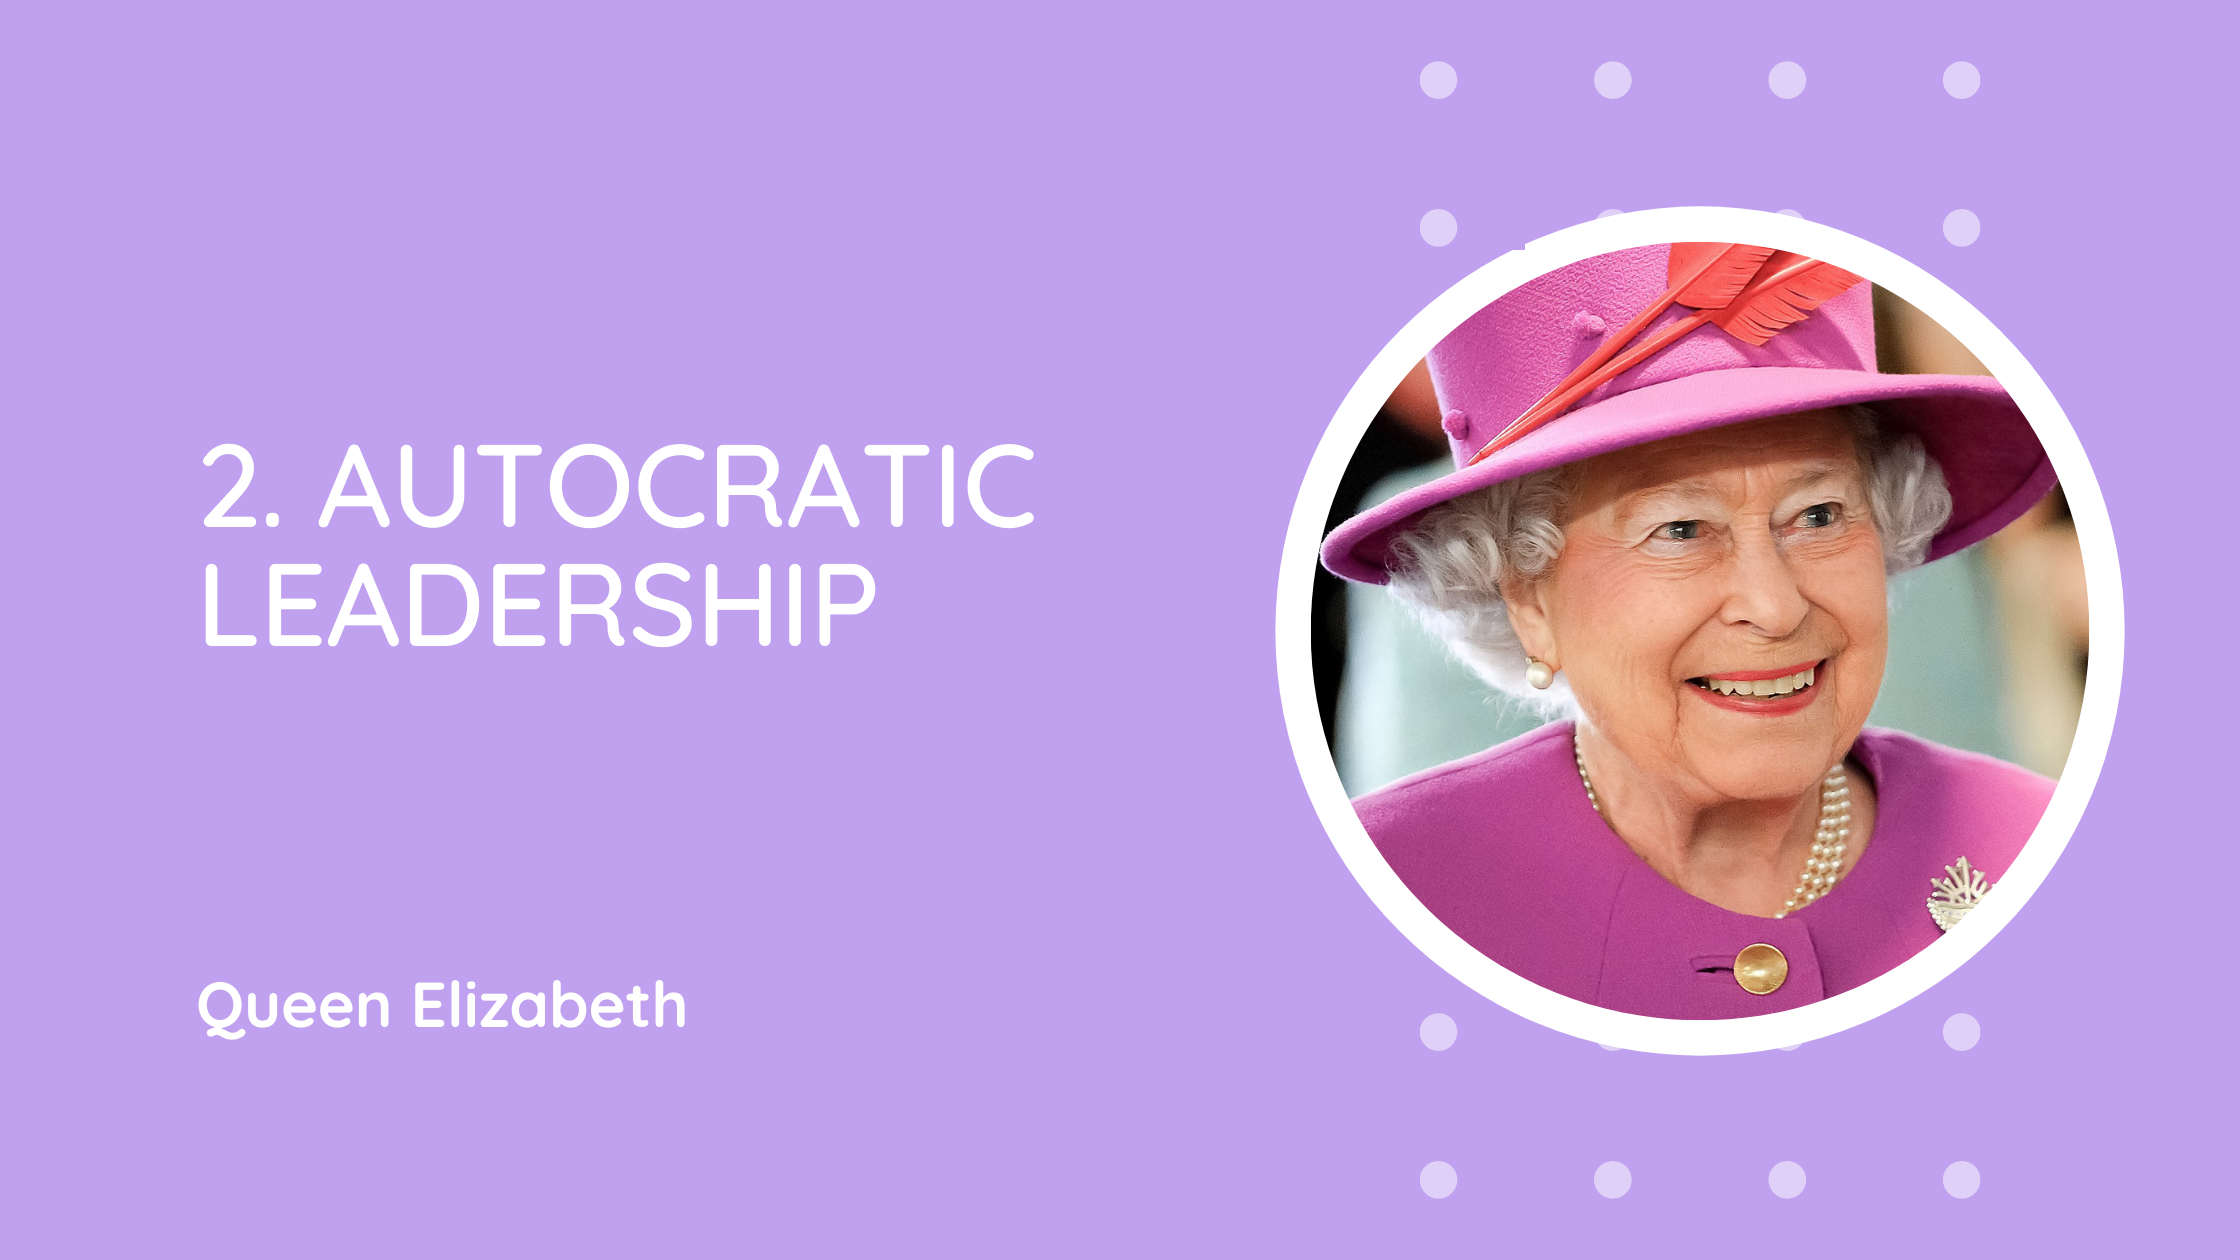 Autocratic Leadership